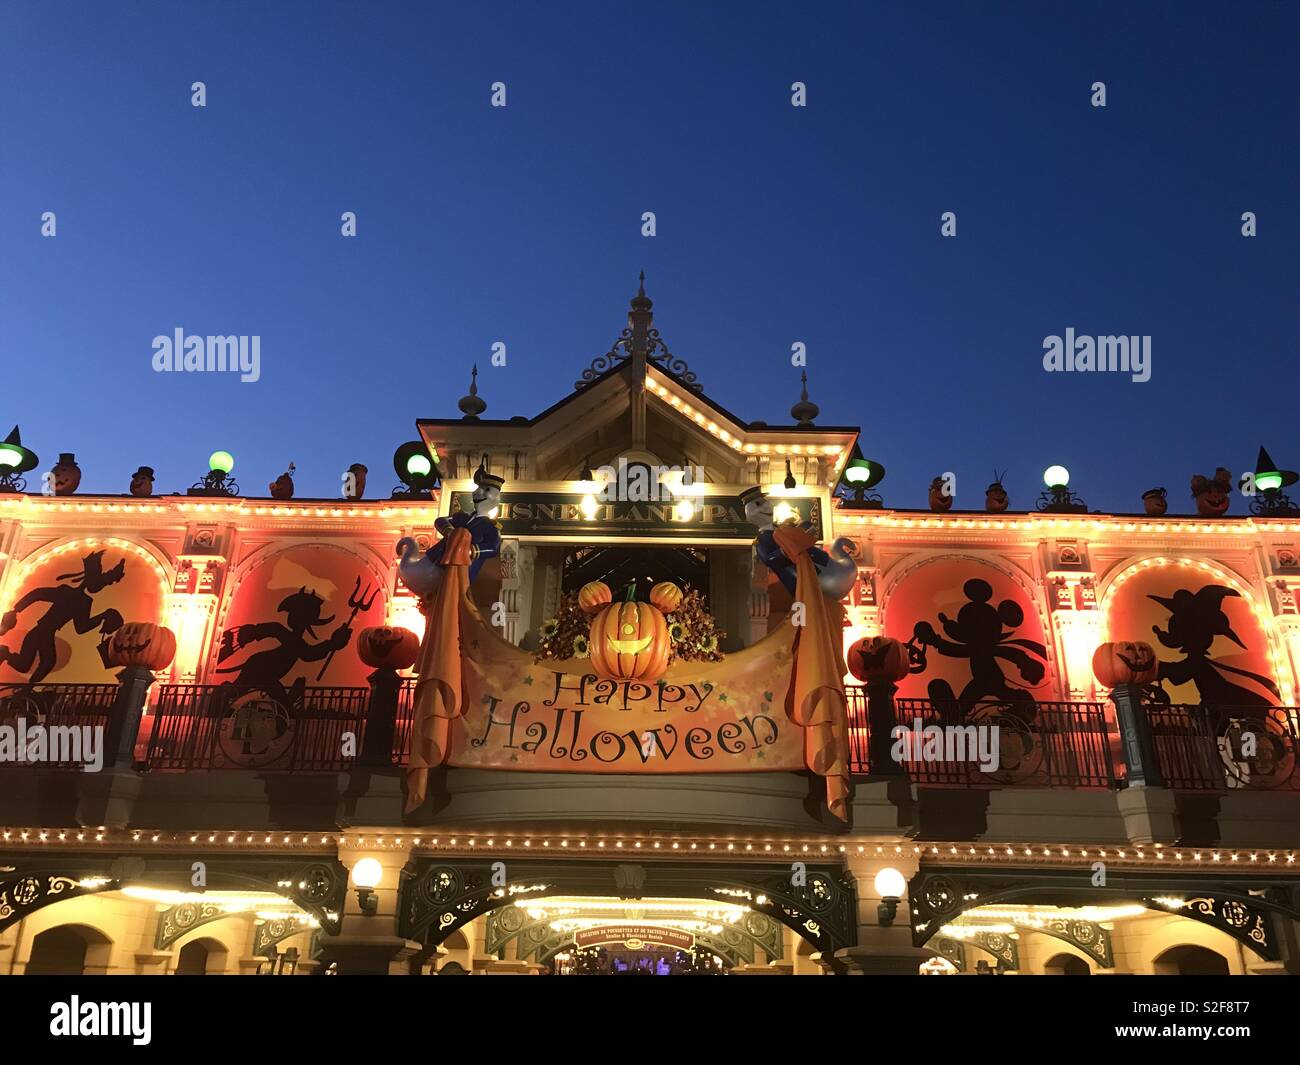 Disneyland Paris at night Stock Photo - Alamy